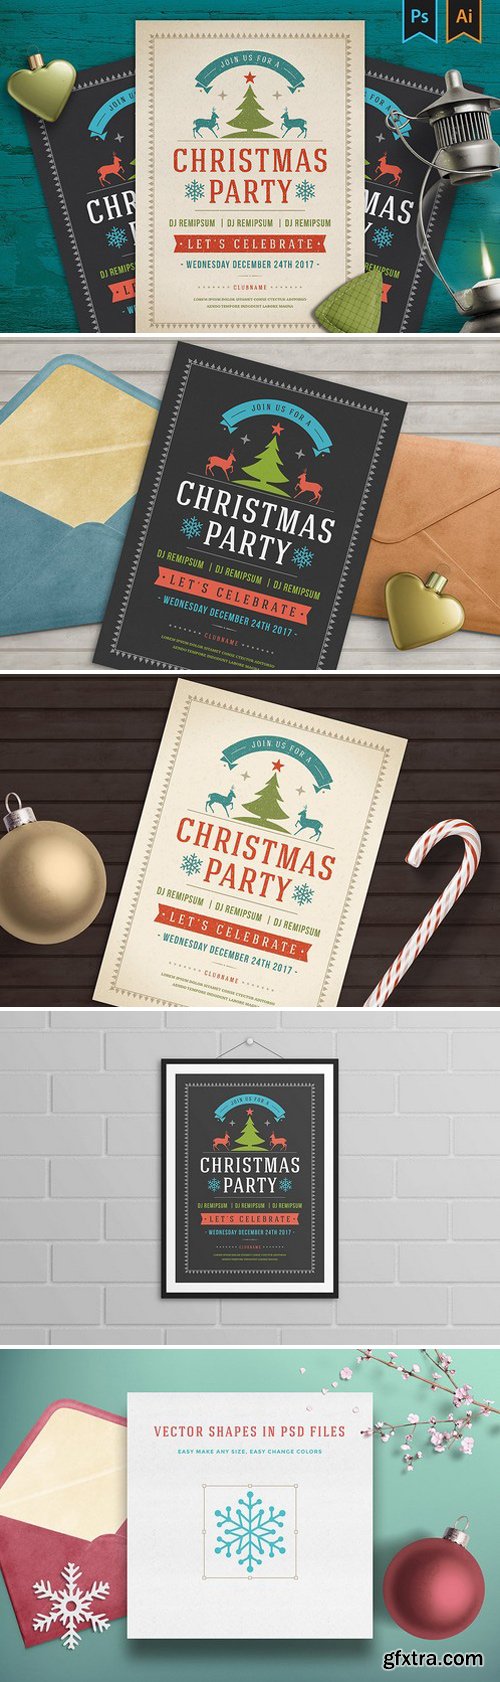 CM - Christmas party invitation flyer 1903705